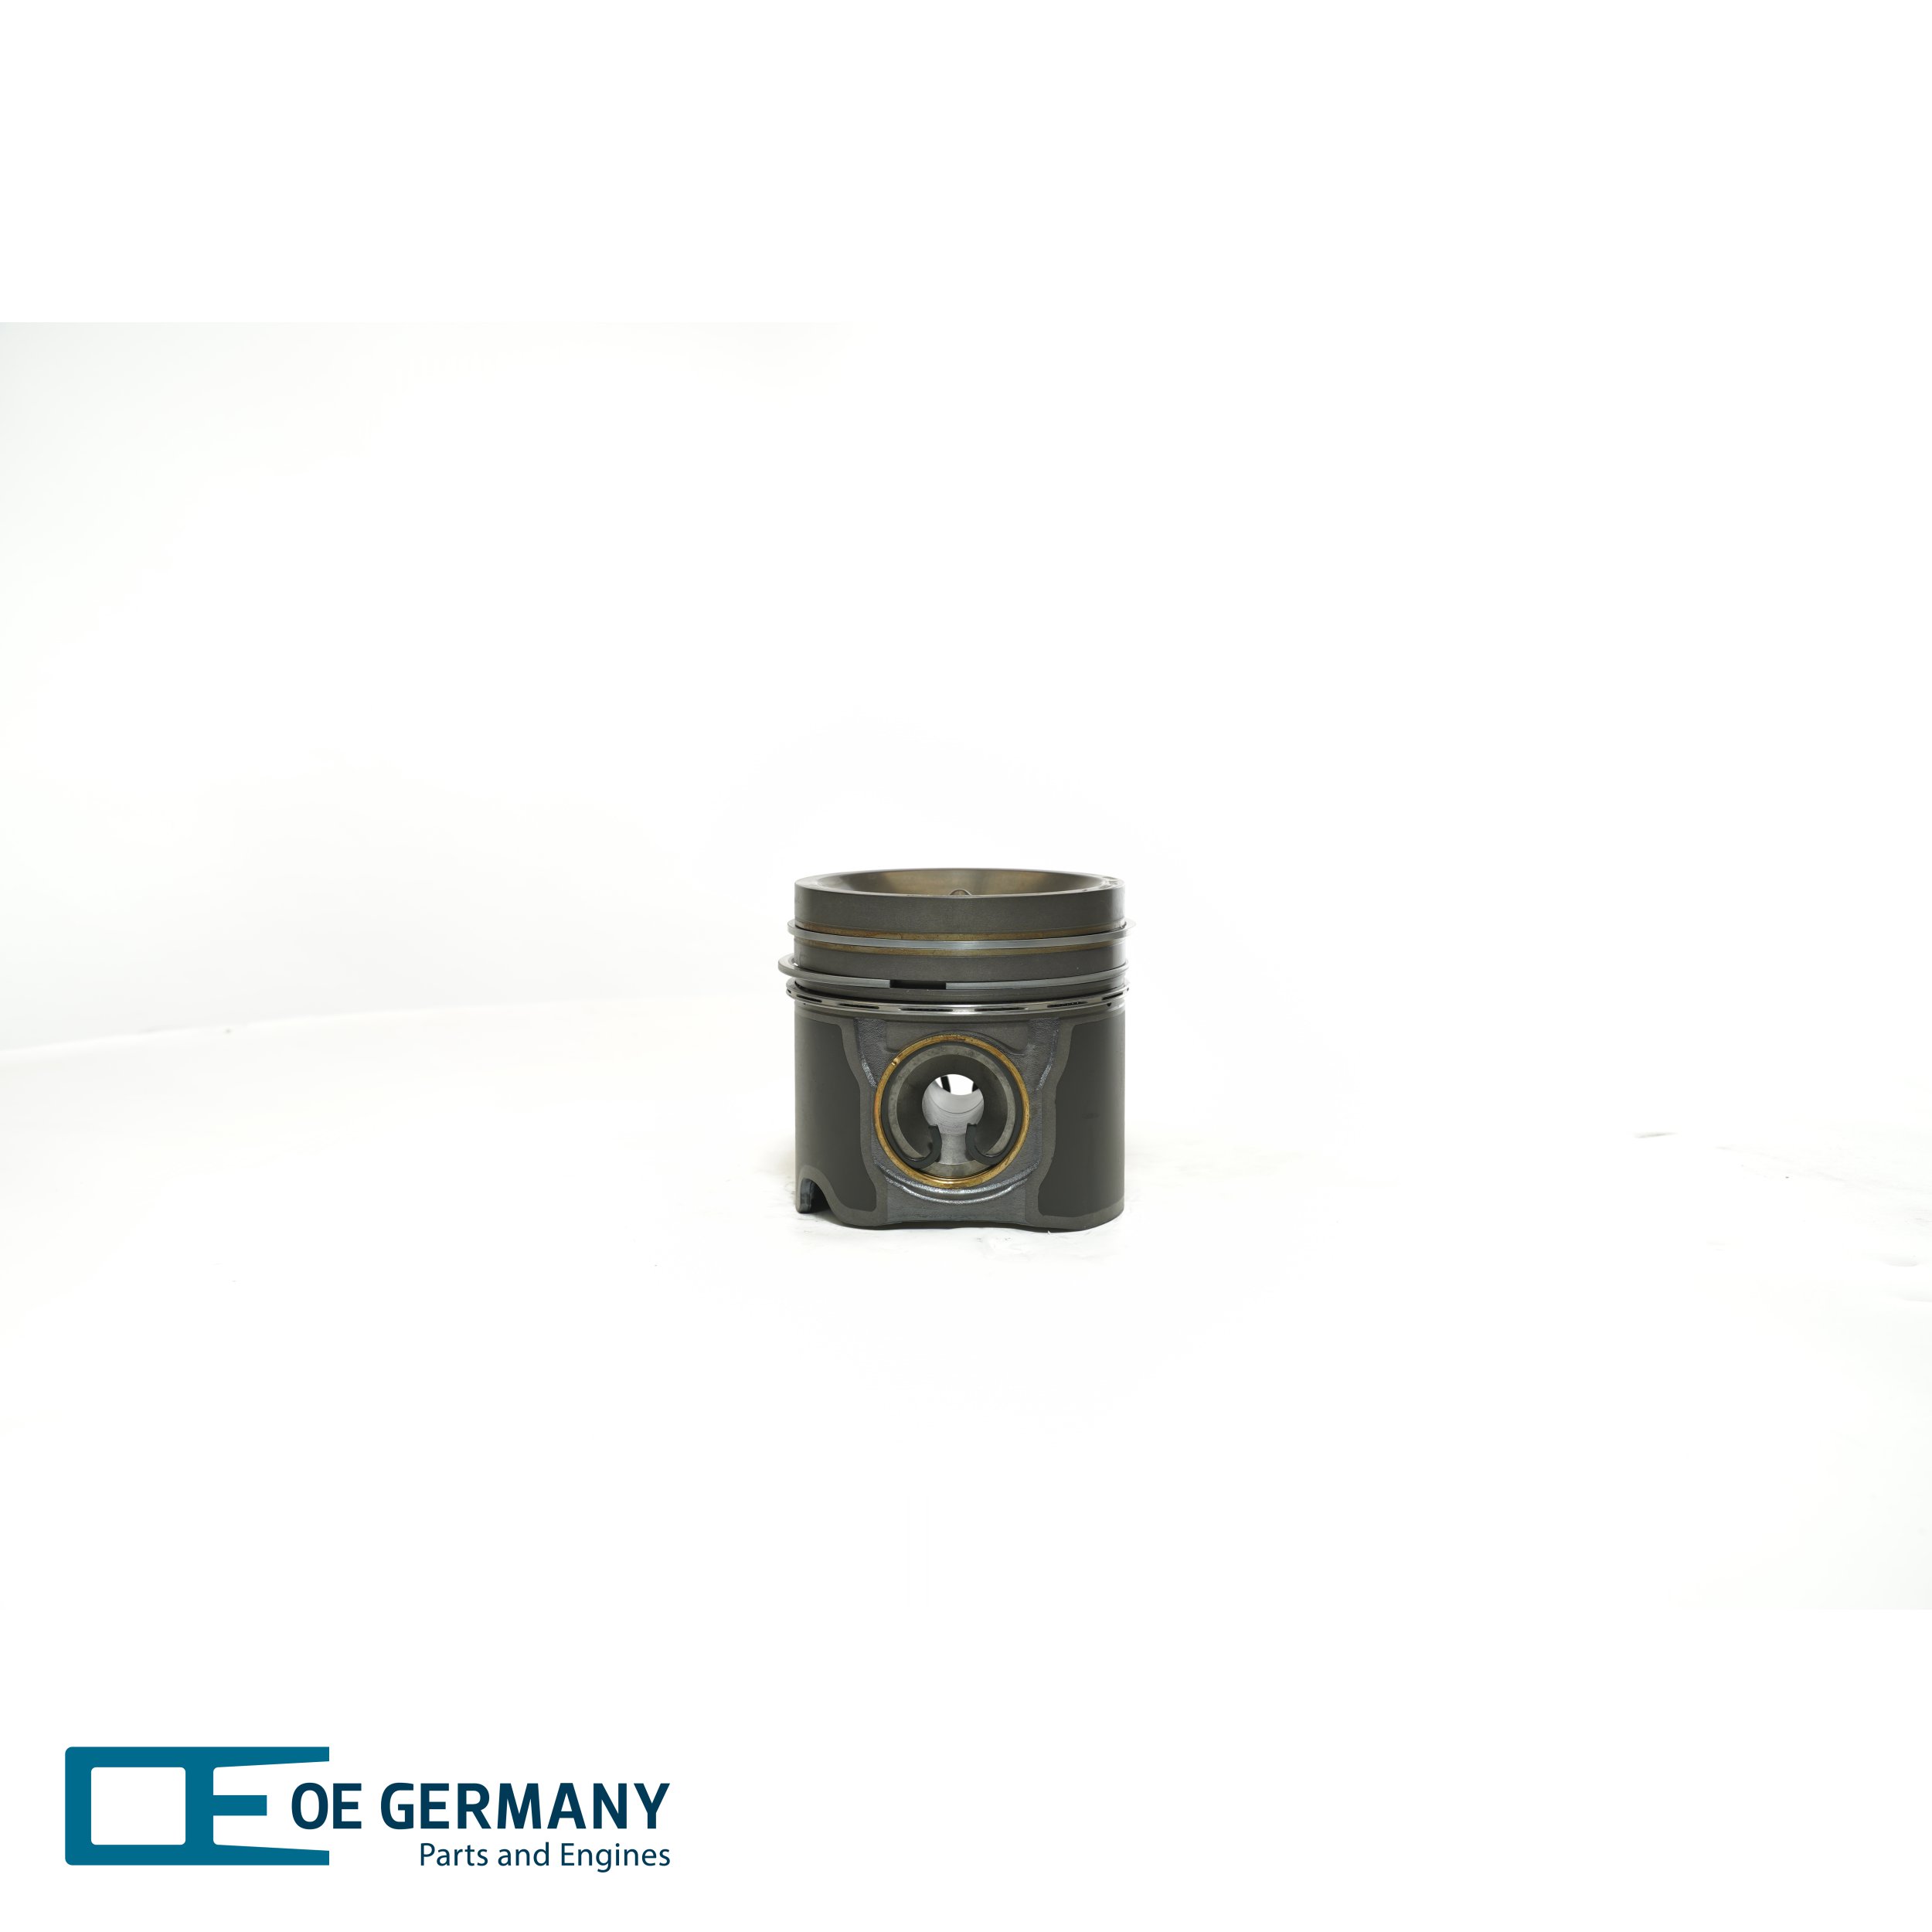 OE Germany 128 mm Engine piston 01 0320 457001 buy